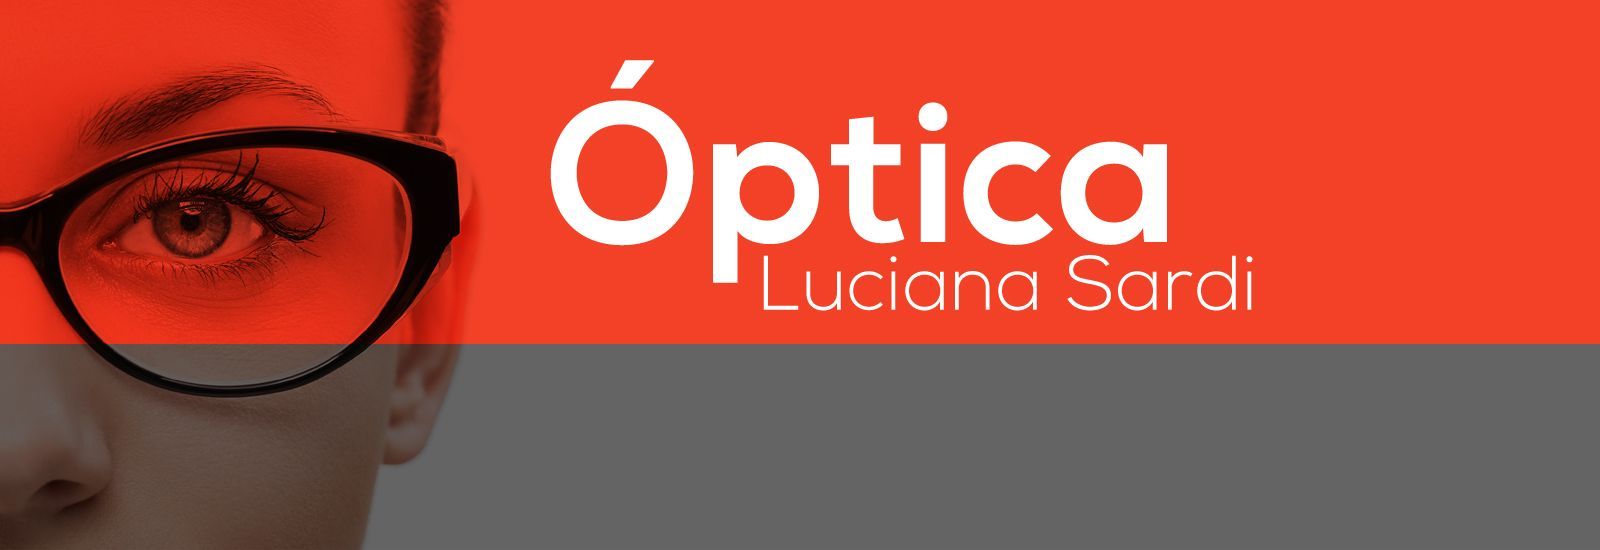 Optica Luciana Sardi logo